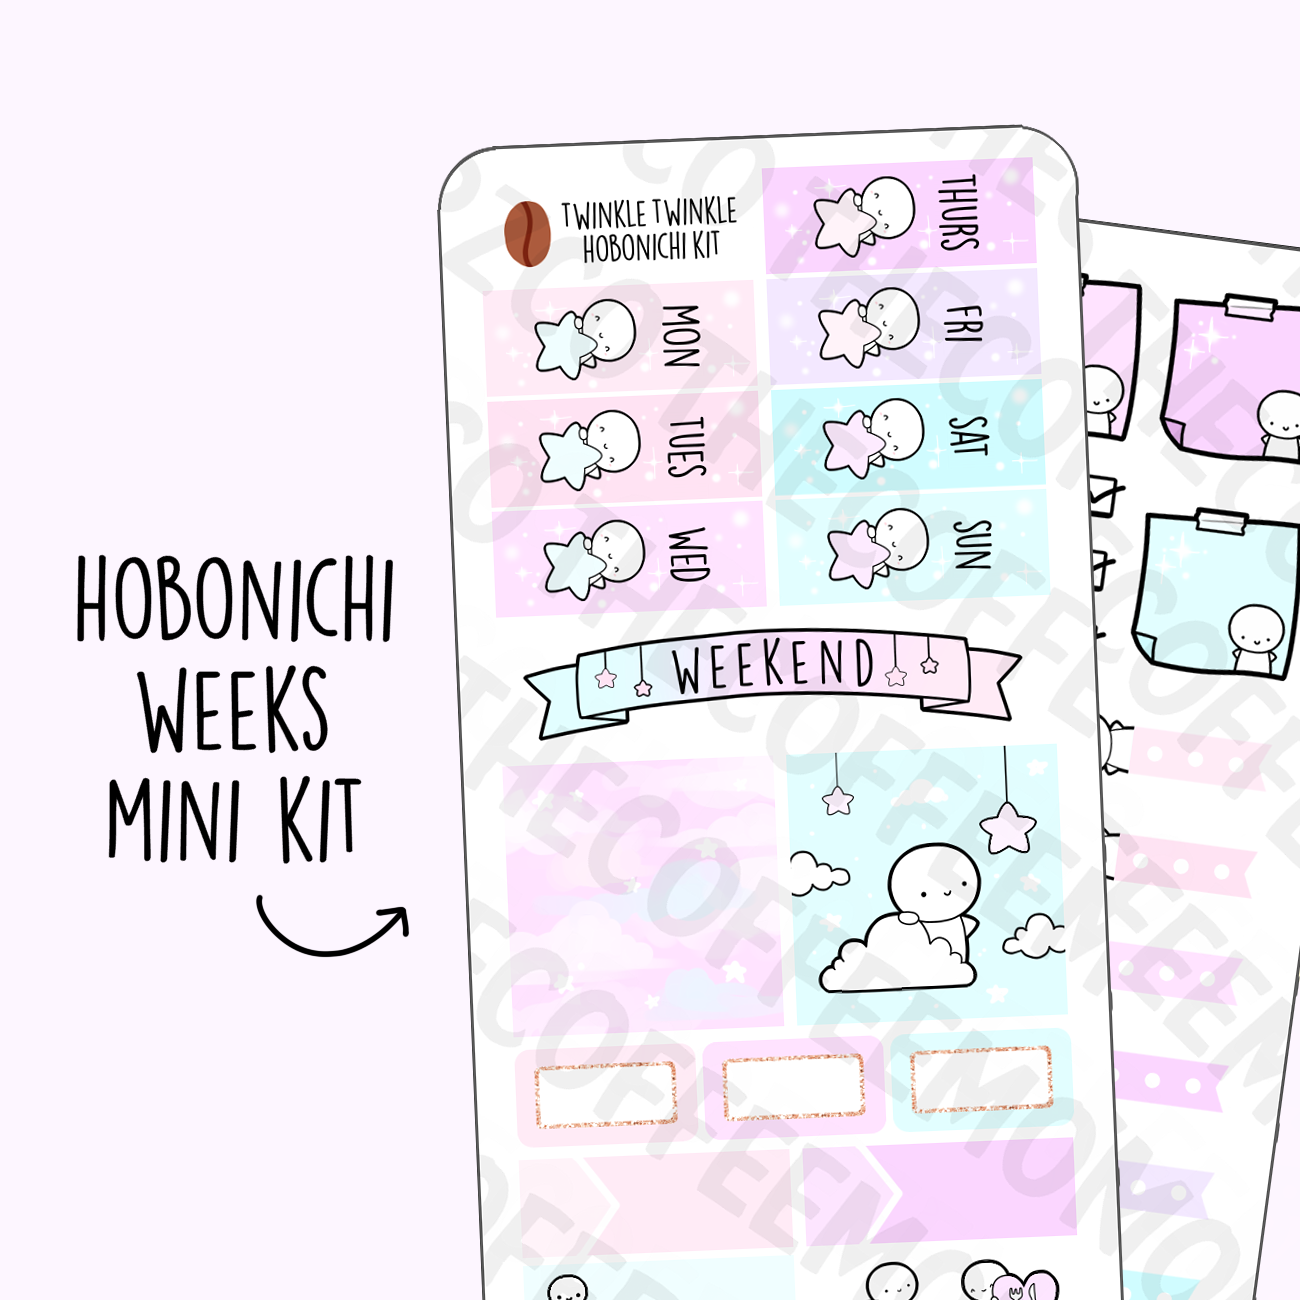 Twinkle twinkle Hobonichi Weeks Kit